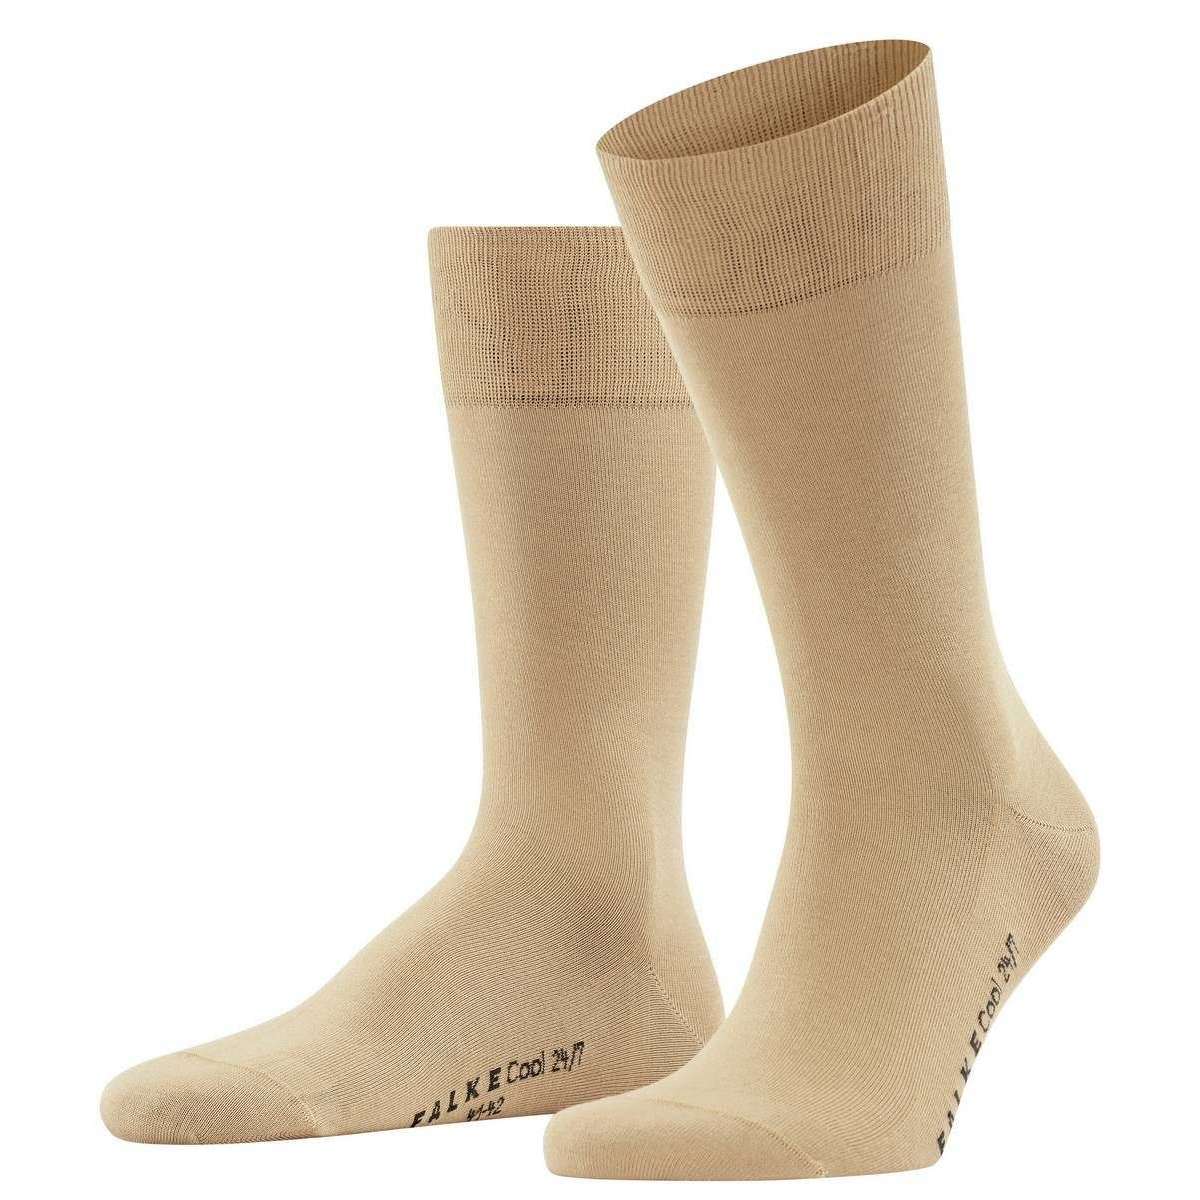 Falke Cool 24/7 Socks - Sand Beige - Extra Small - 5.5-6.5 UK | 6.5-7.5 US | 39-40 EUR